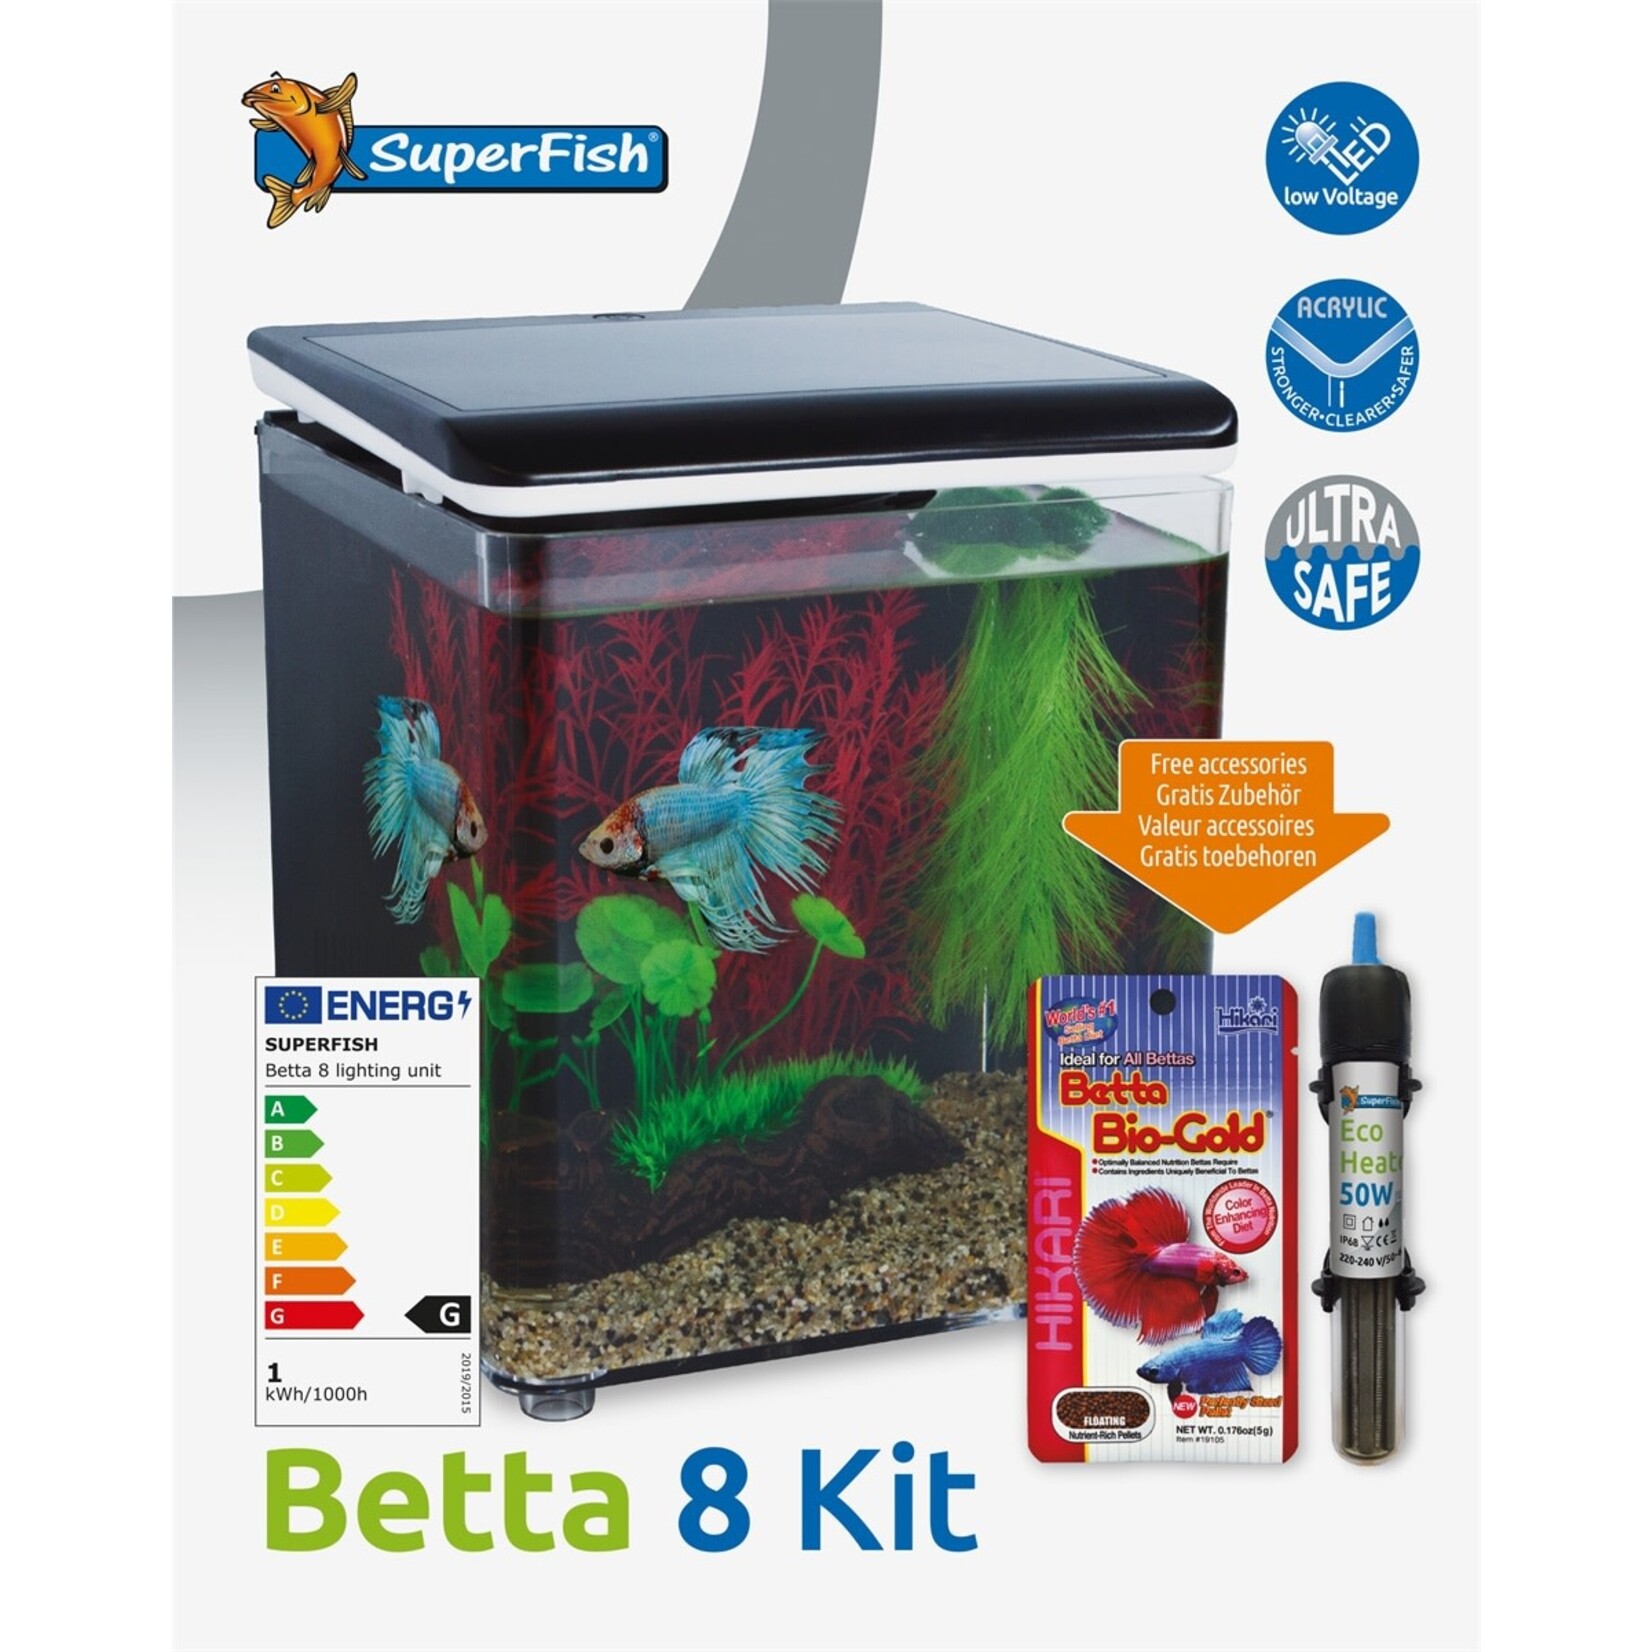 SuperFish Betta 8 aquarium zwart